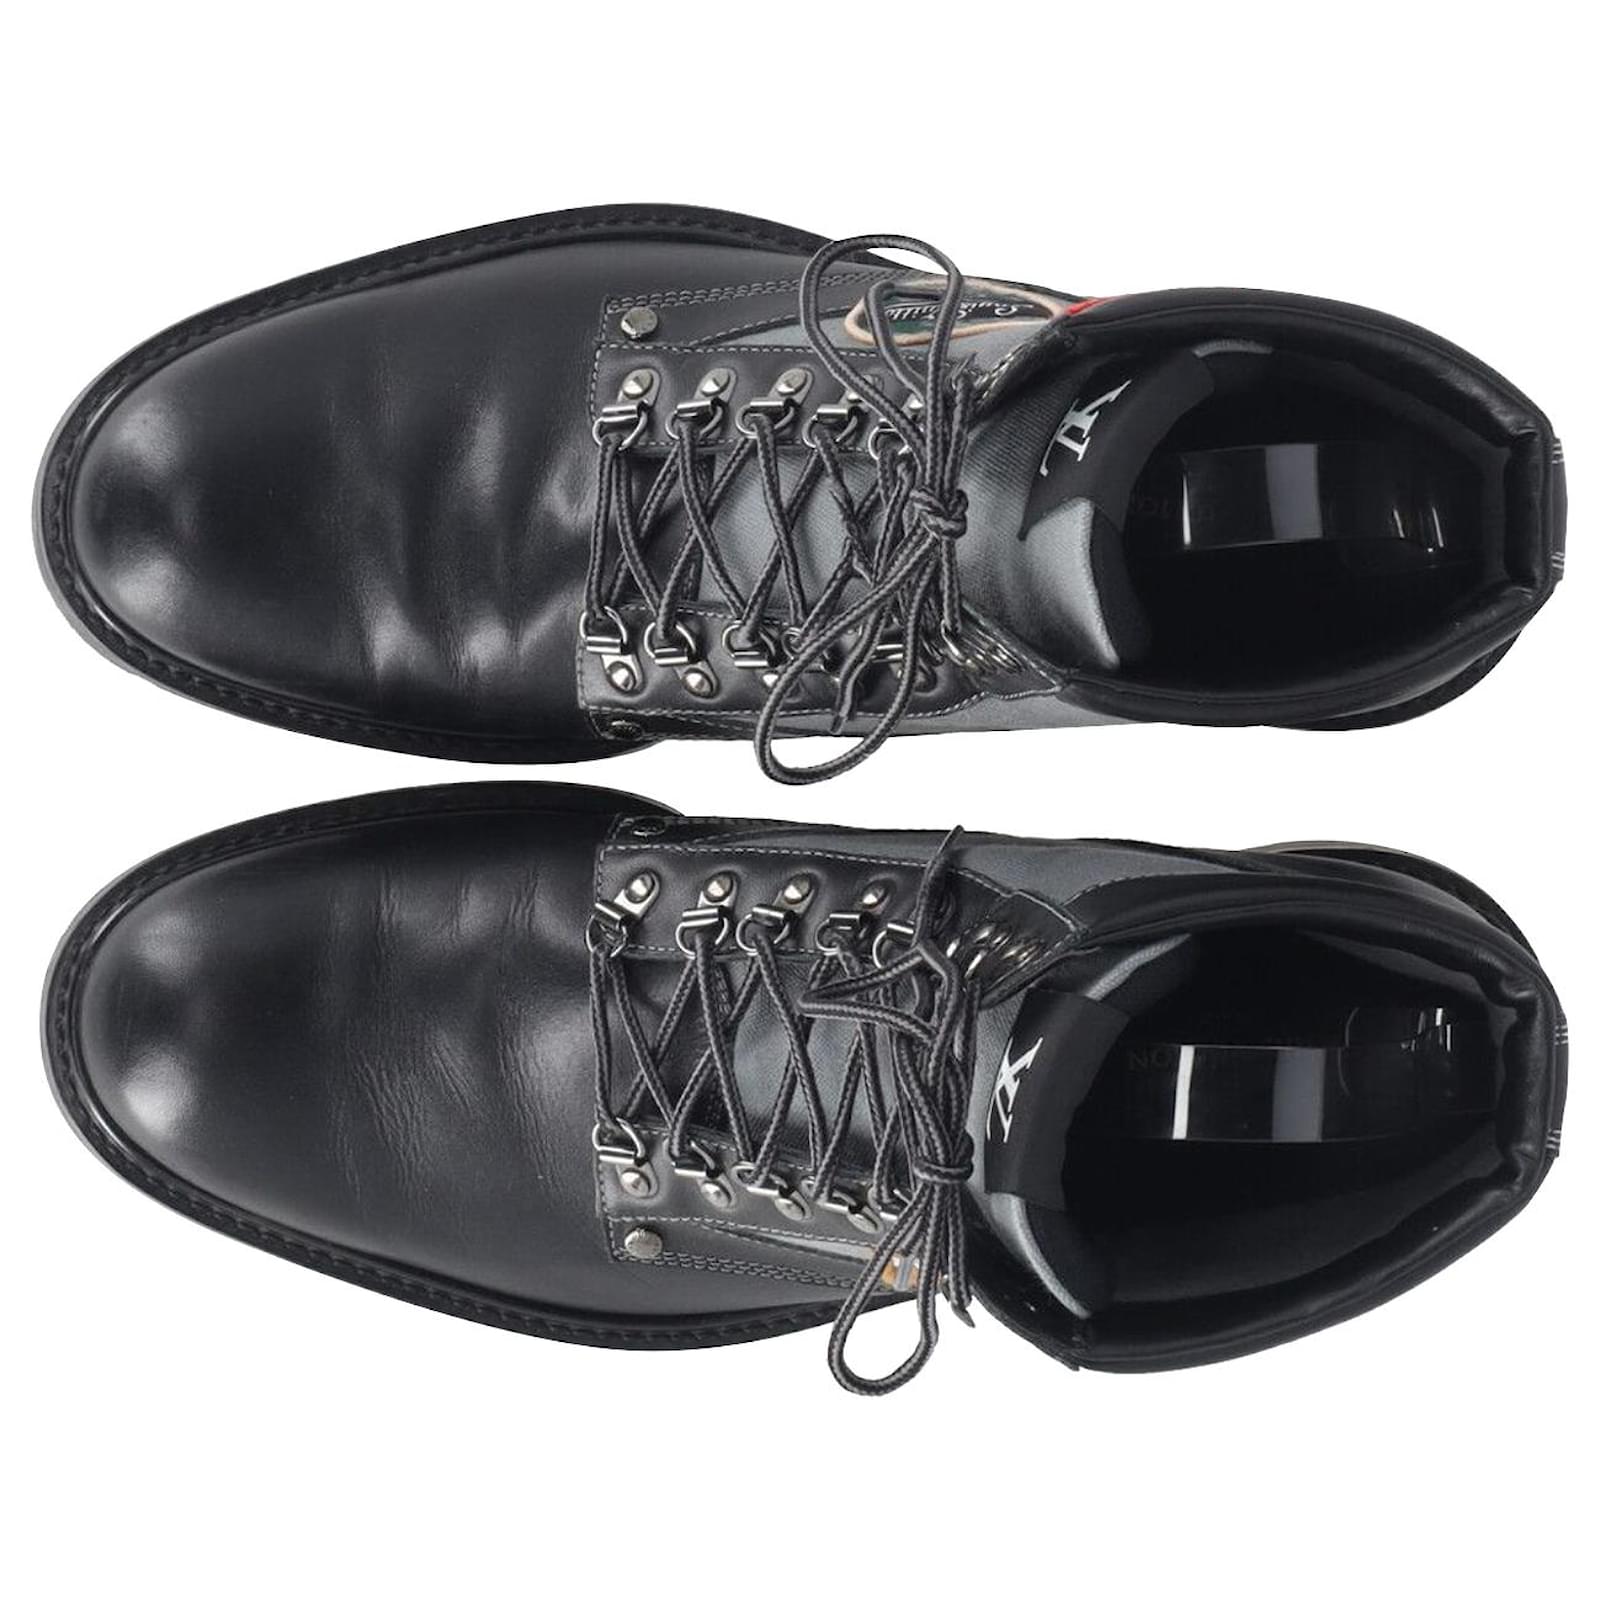 Buy Louis Vuitton Oberkampf Ankle Boot 'Cognac' - 1A4NBR - Brown